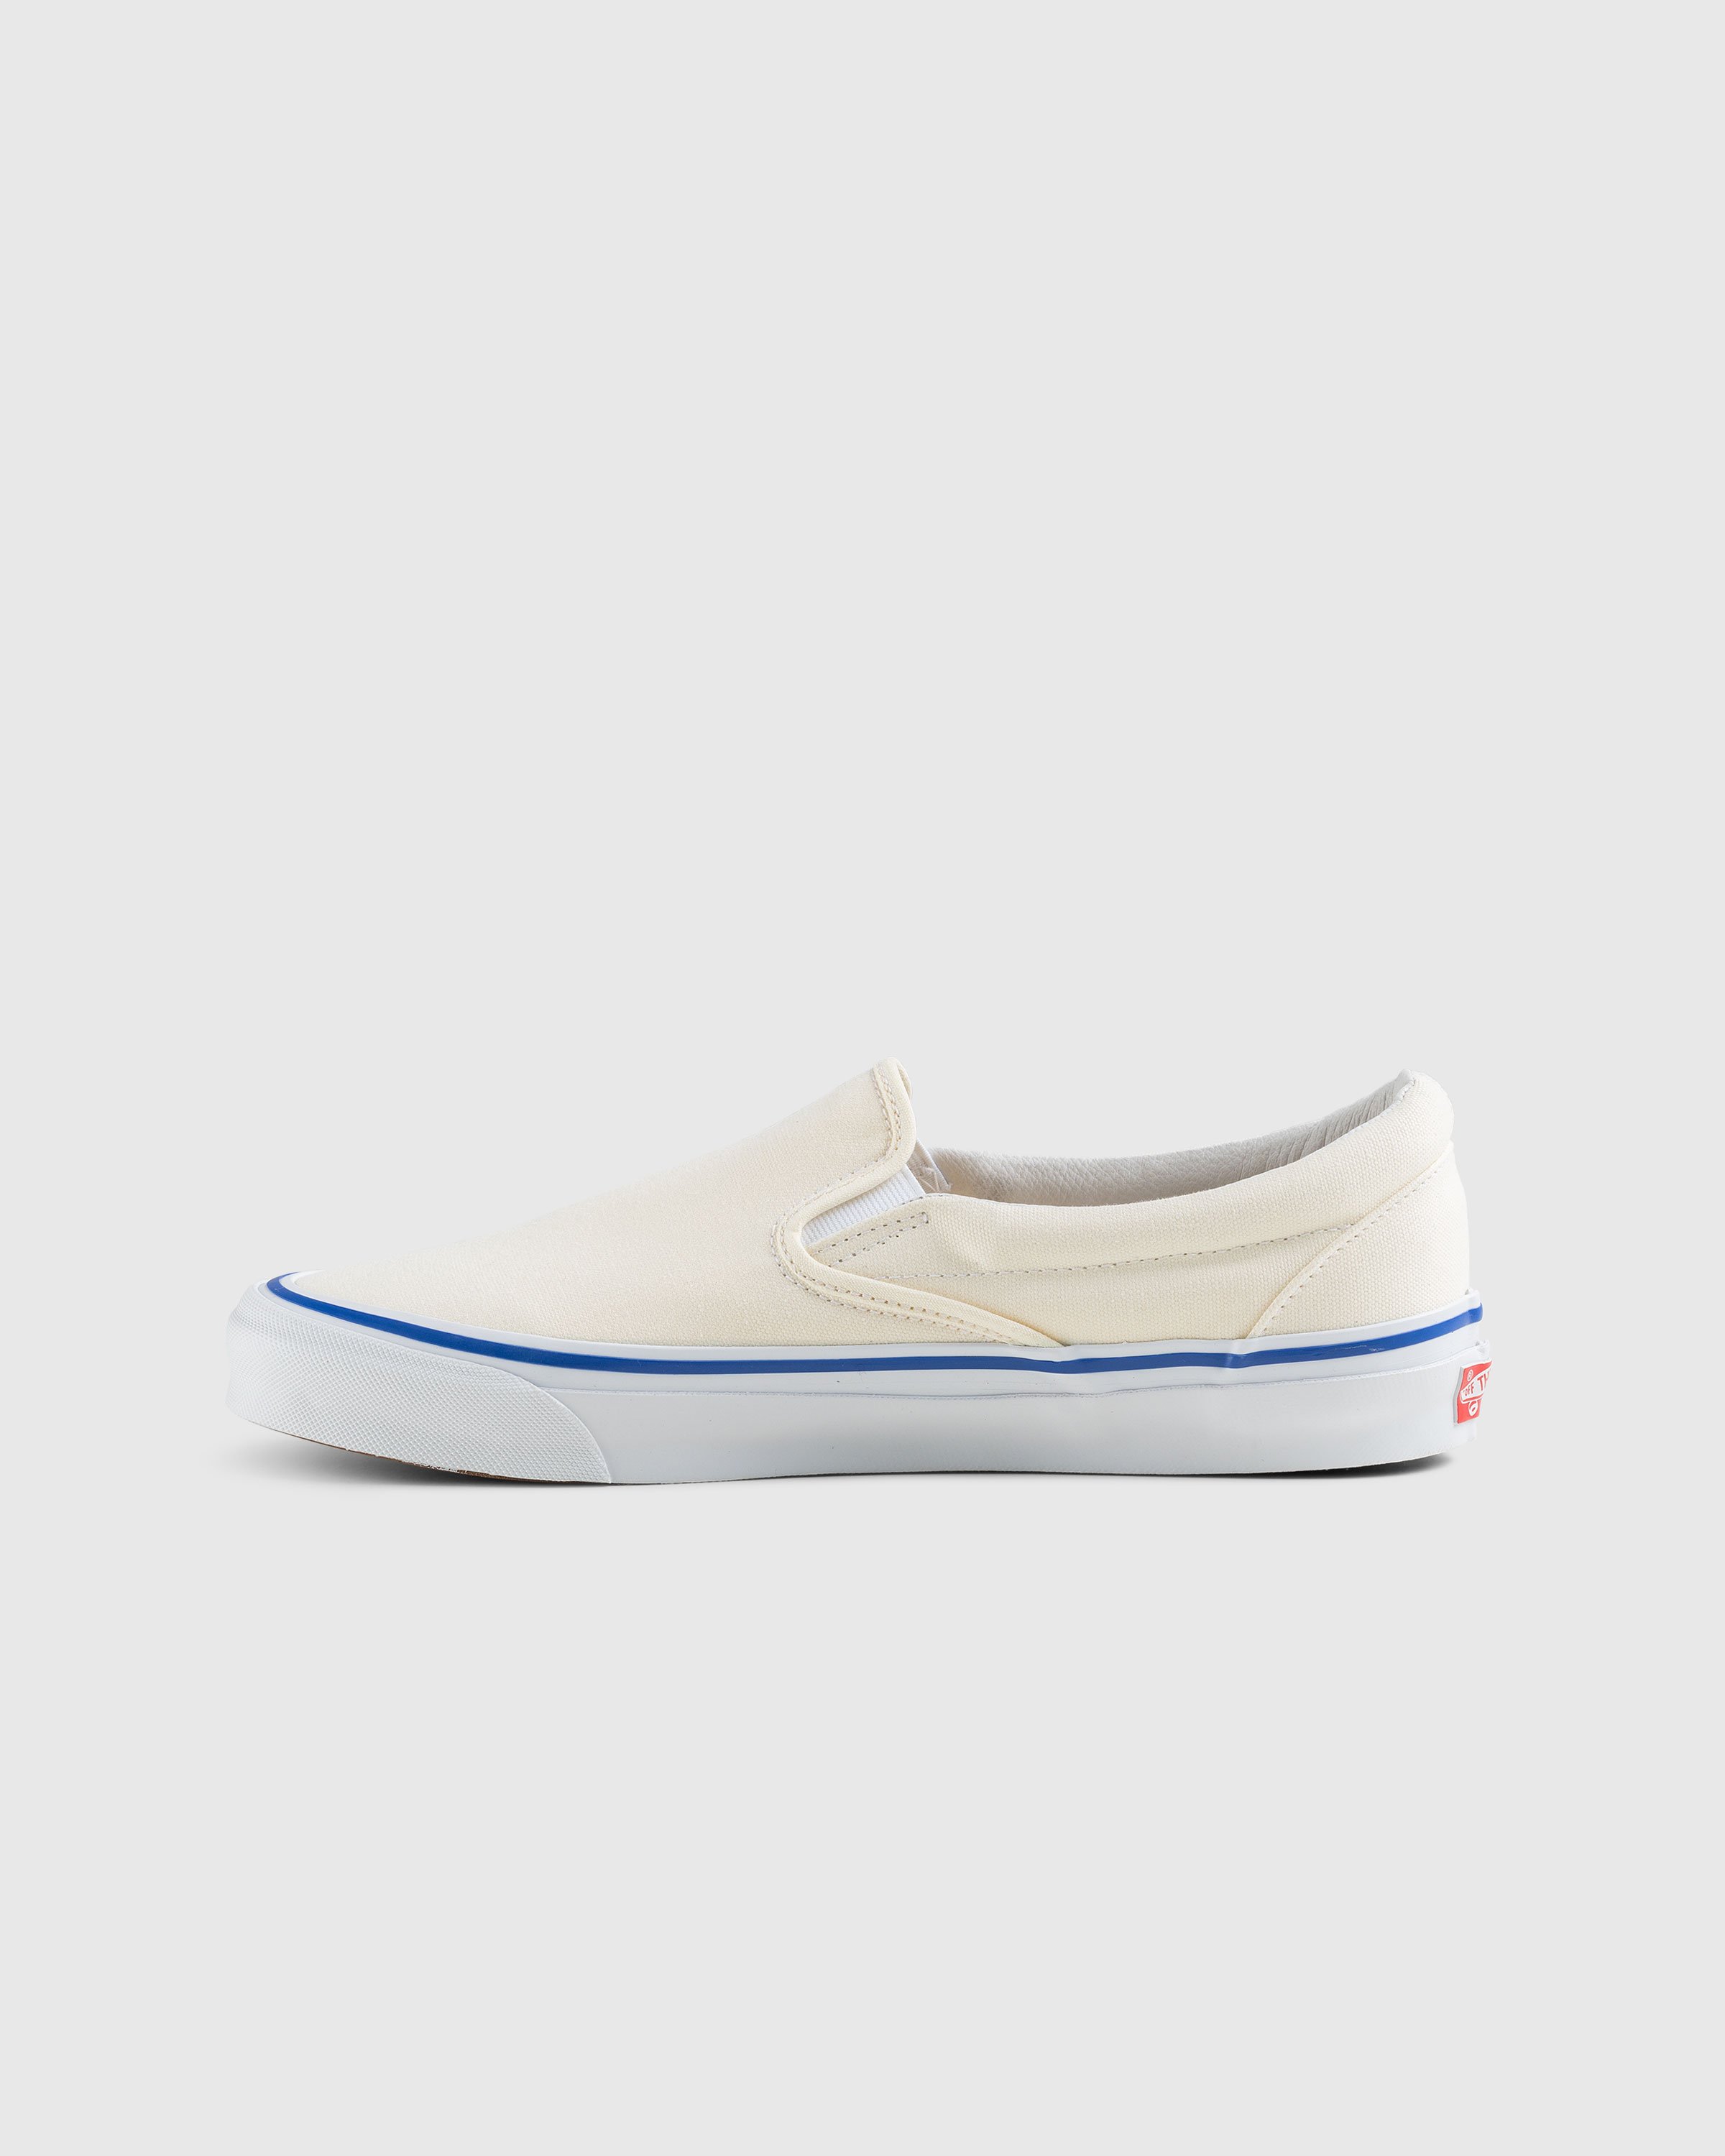 Vans - Classic Slip-On LX Classic White - Footwear - White - Image 2